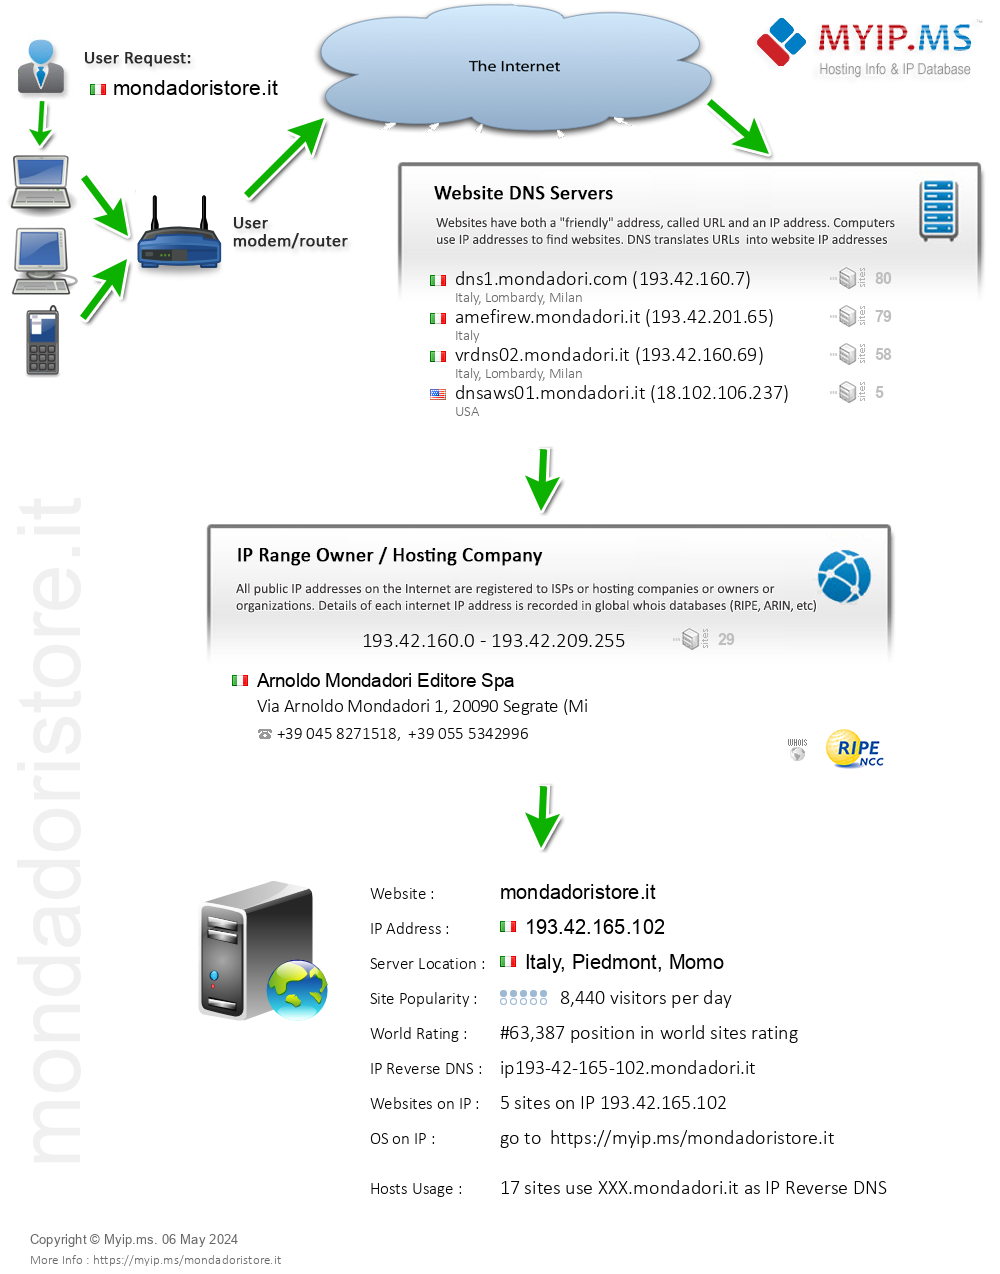 Mondadoristore.it - Website Hosting Visual IP Diagram